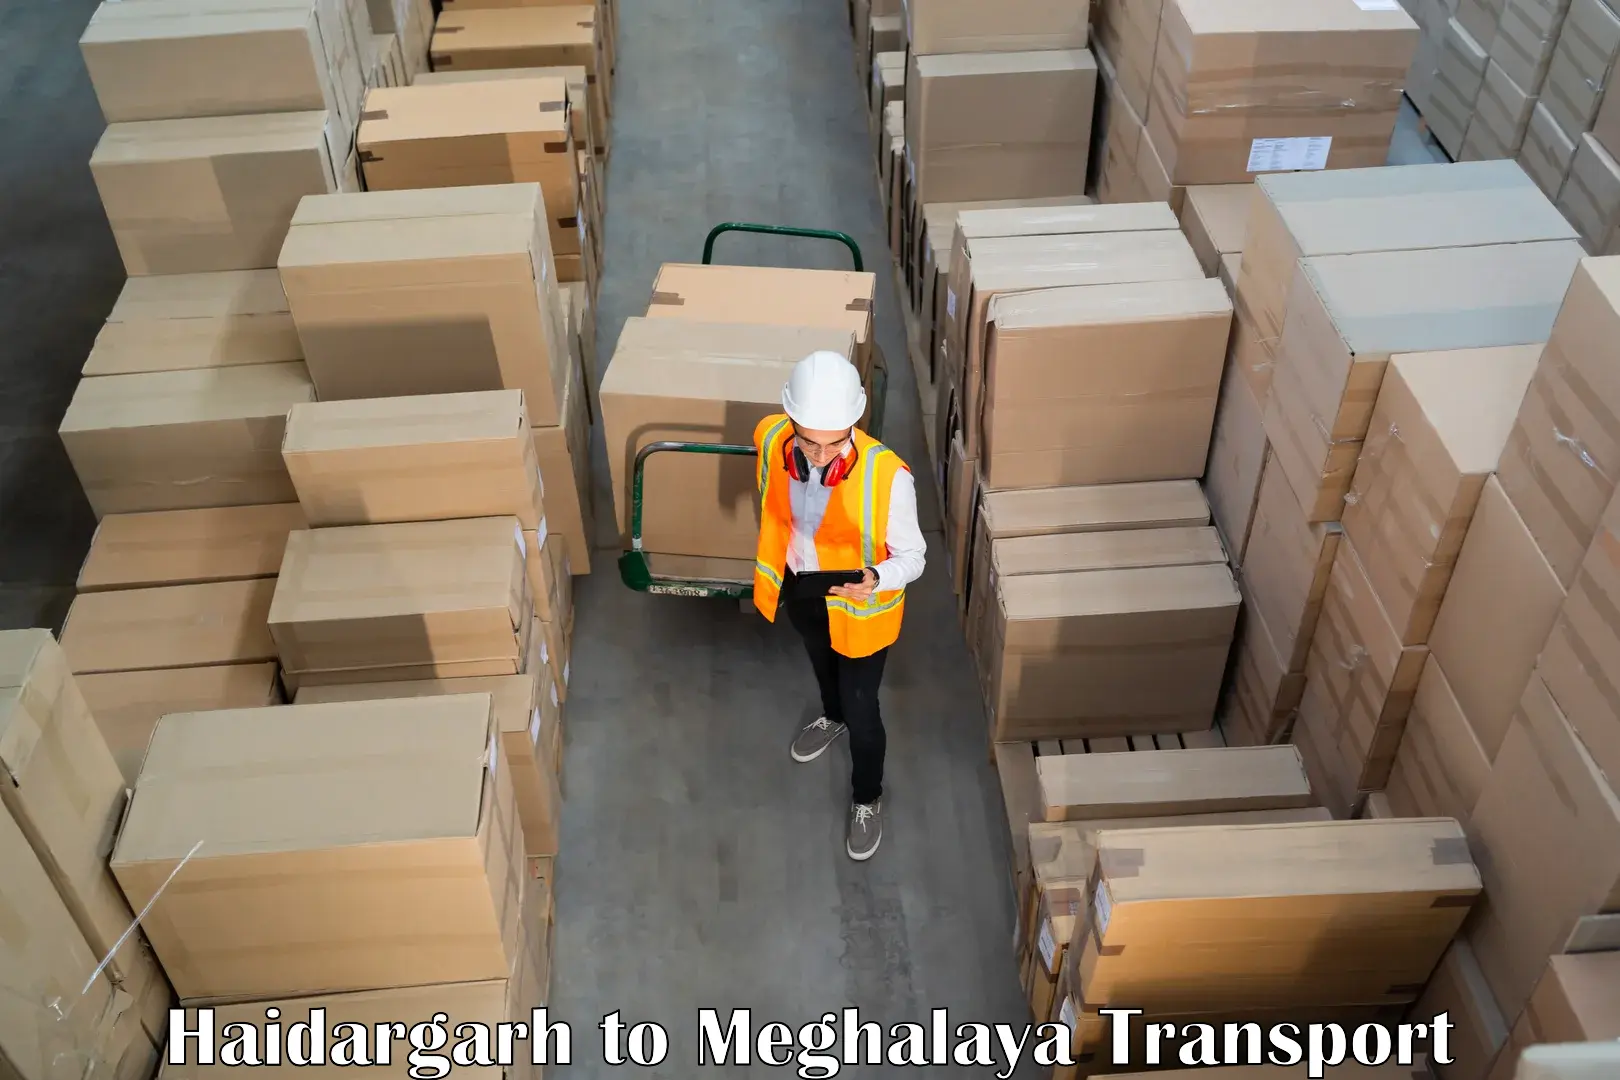 Shipping services Haidargarh to Phulbari